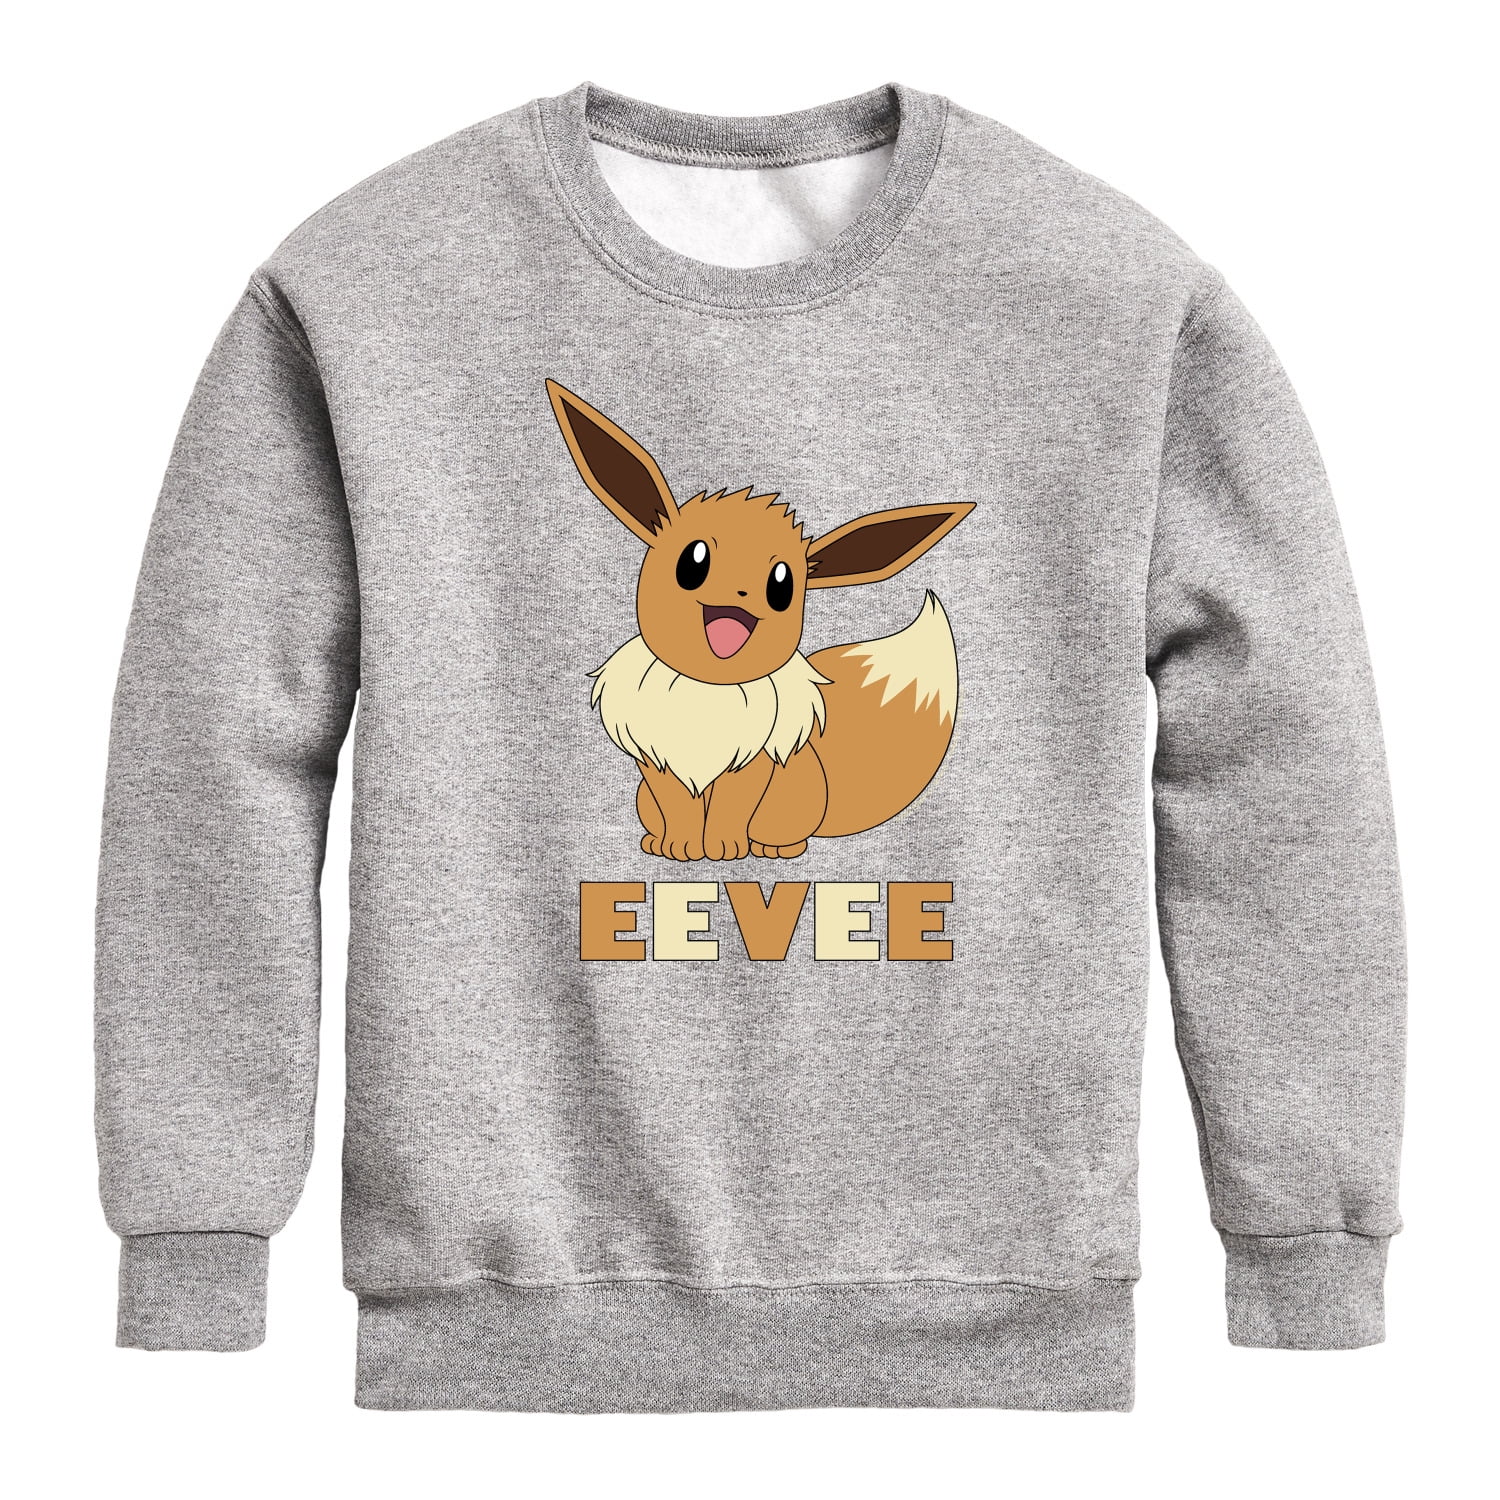 Pokémon - Meowth Mischevious Laugh - Youth Crewneck Fleece Sweatshirt 